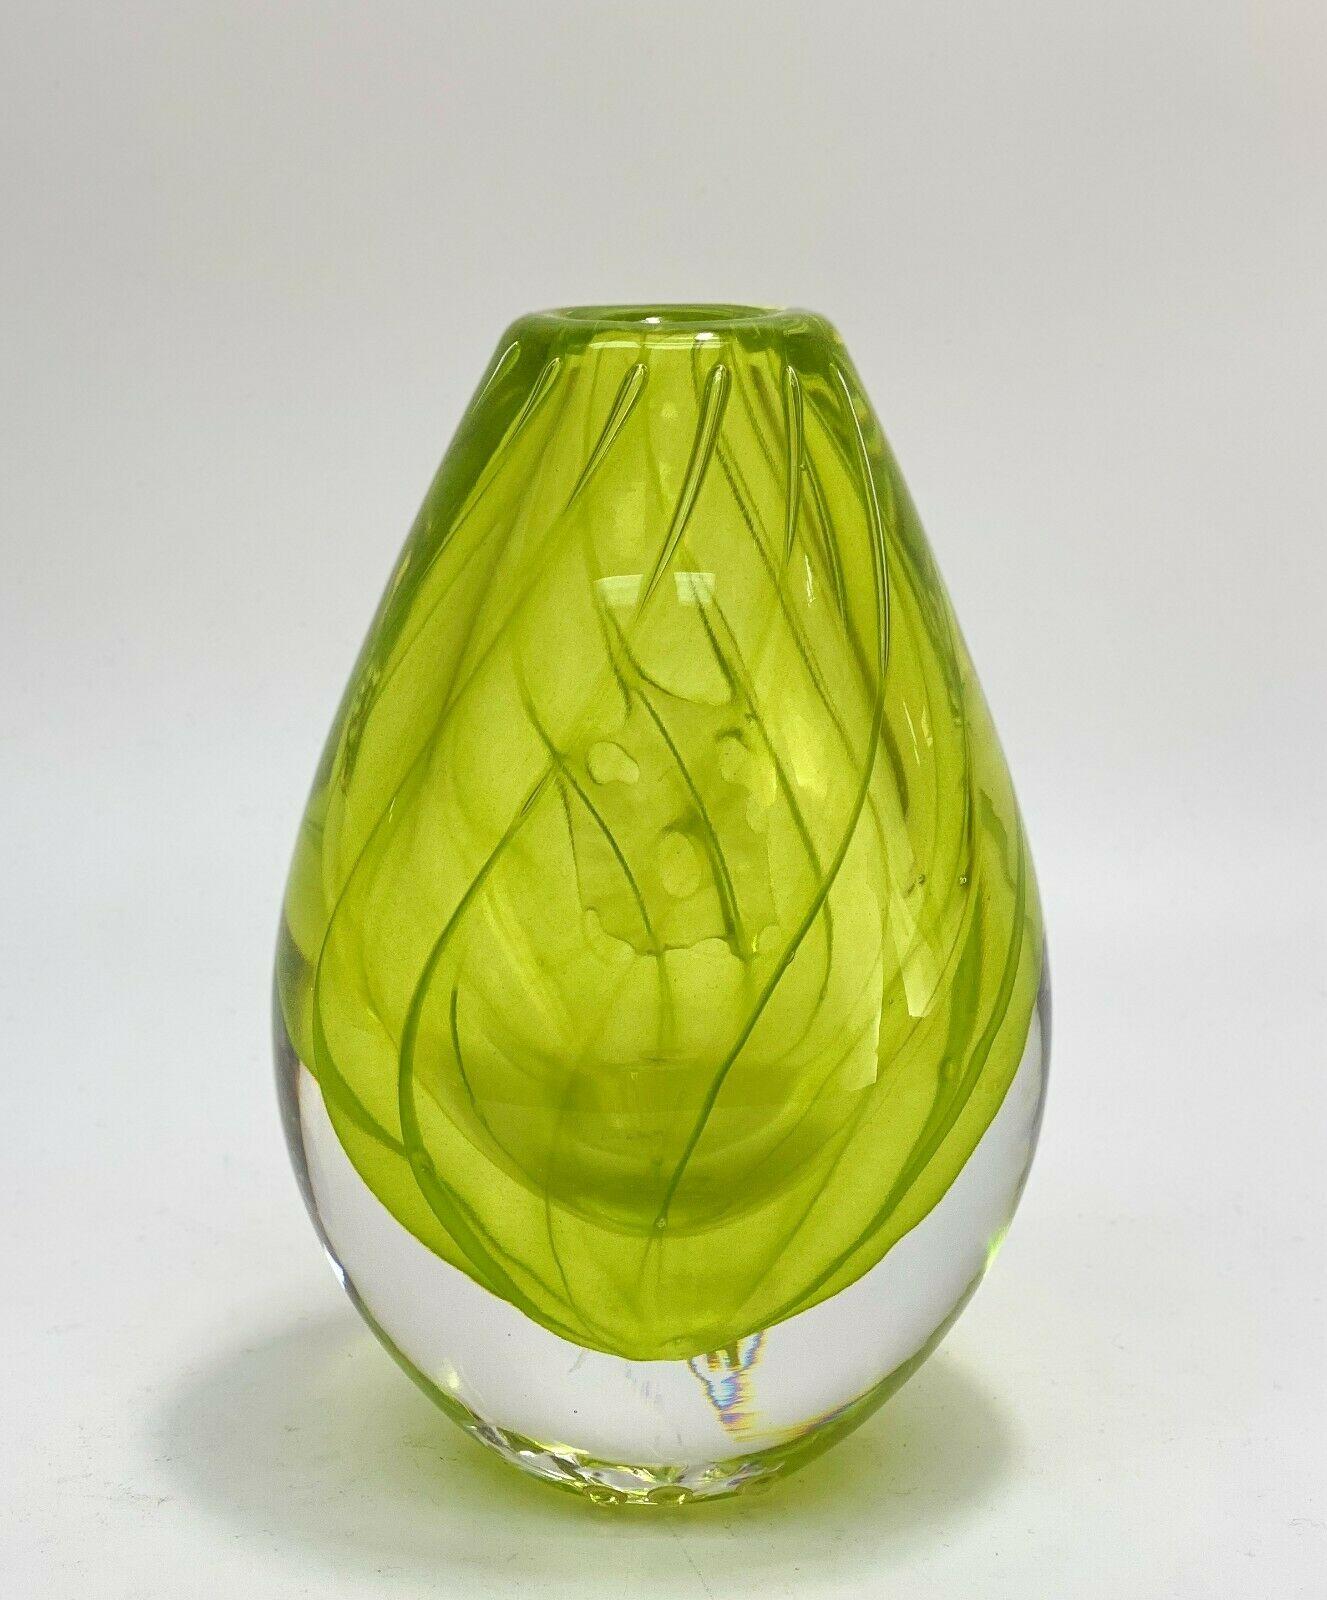 Lars Hellsten Orrefors Sweden Expo Art glass vase signed

Light green glass vase with a controlled air bubble in the shape of a sun. Orrefors Sweden label to lower edge. Underside signed Orrefors Expo 5264-22, 100 Lars Hellsten,